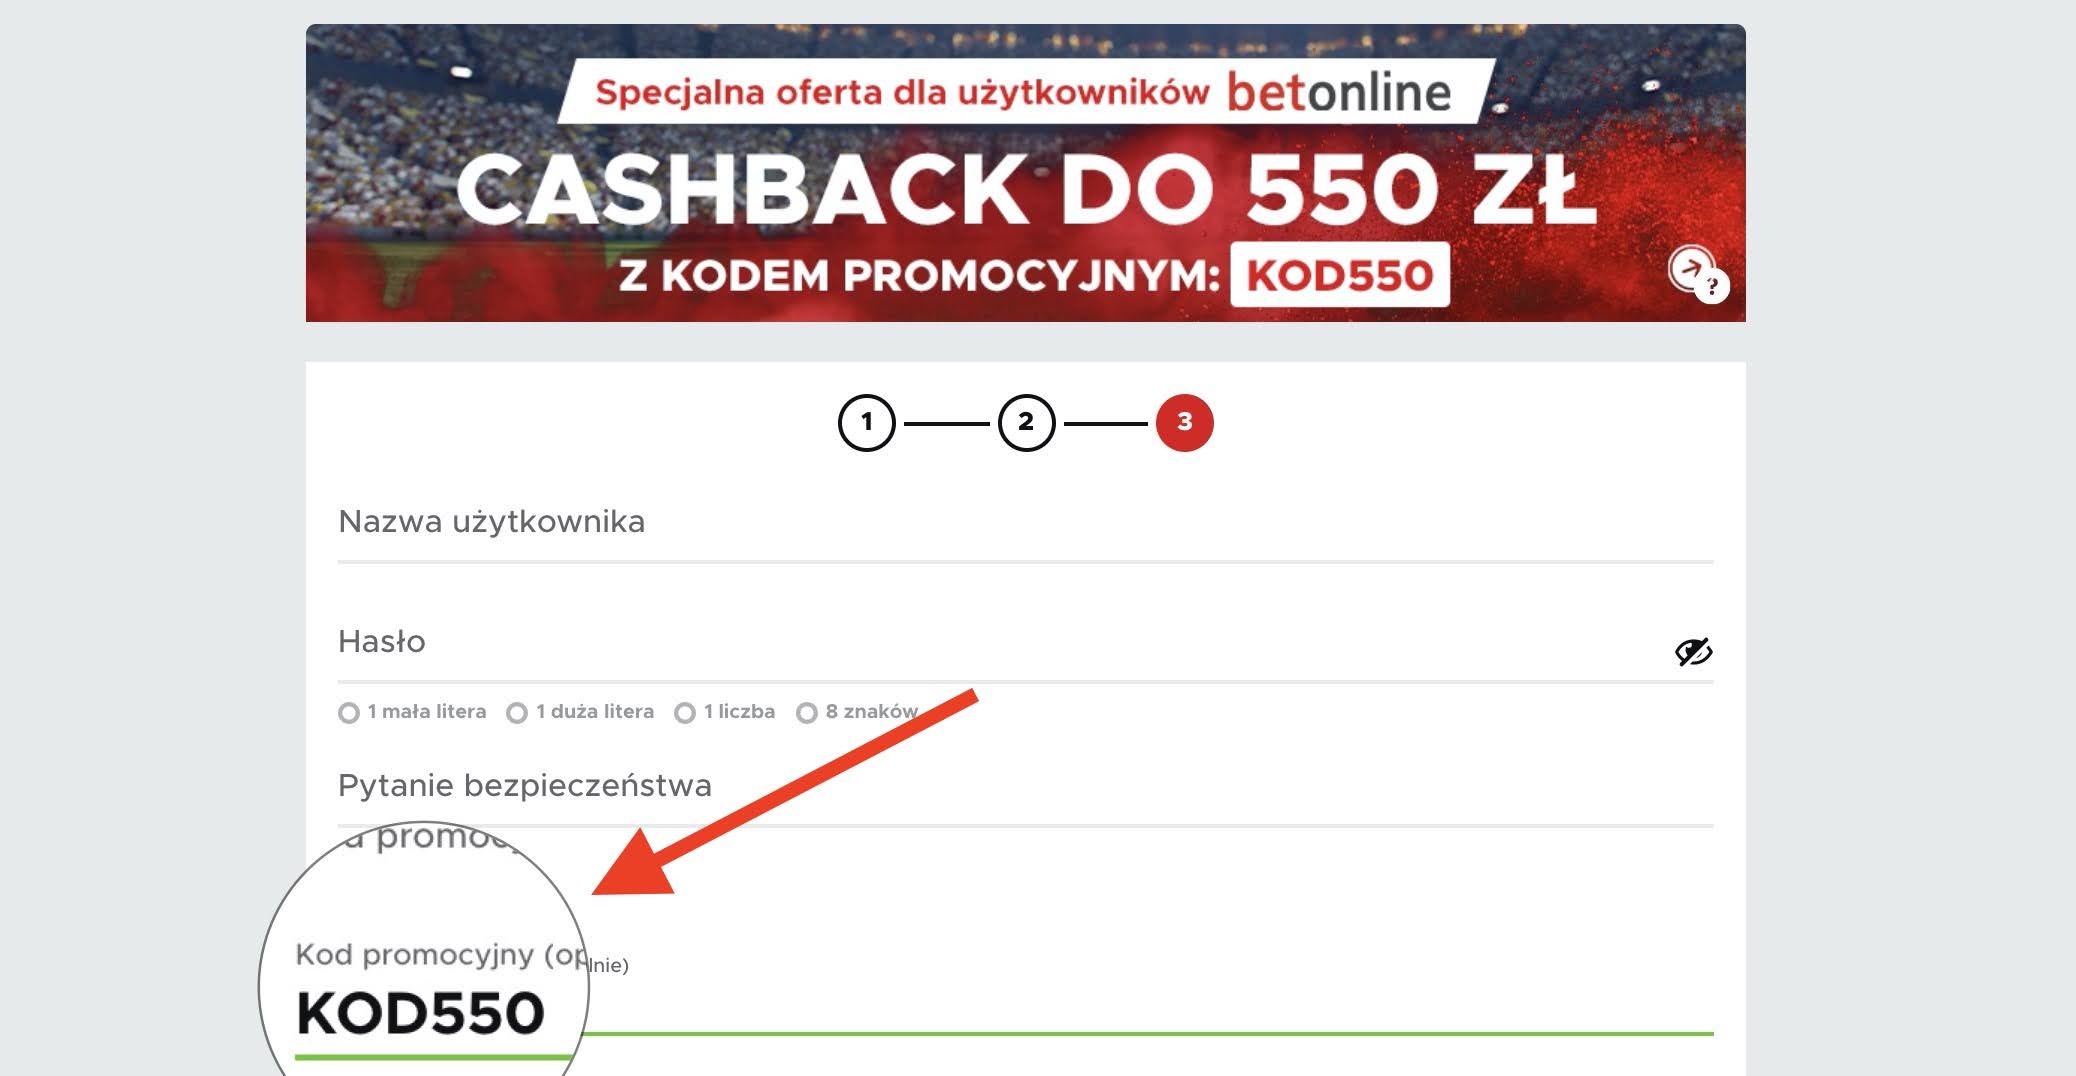 BetClic kod promocyjny - cashback 550 zł